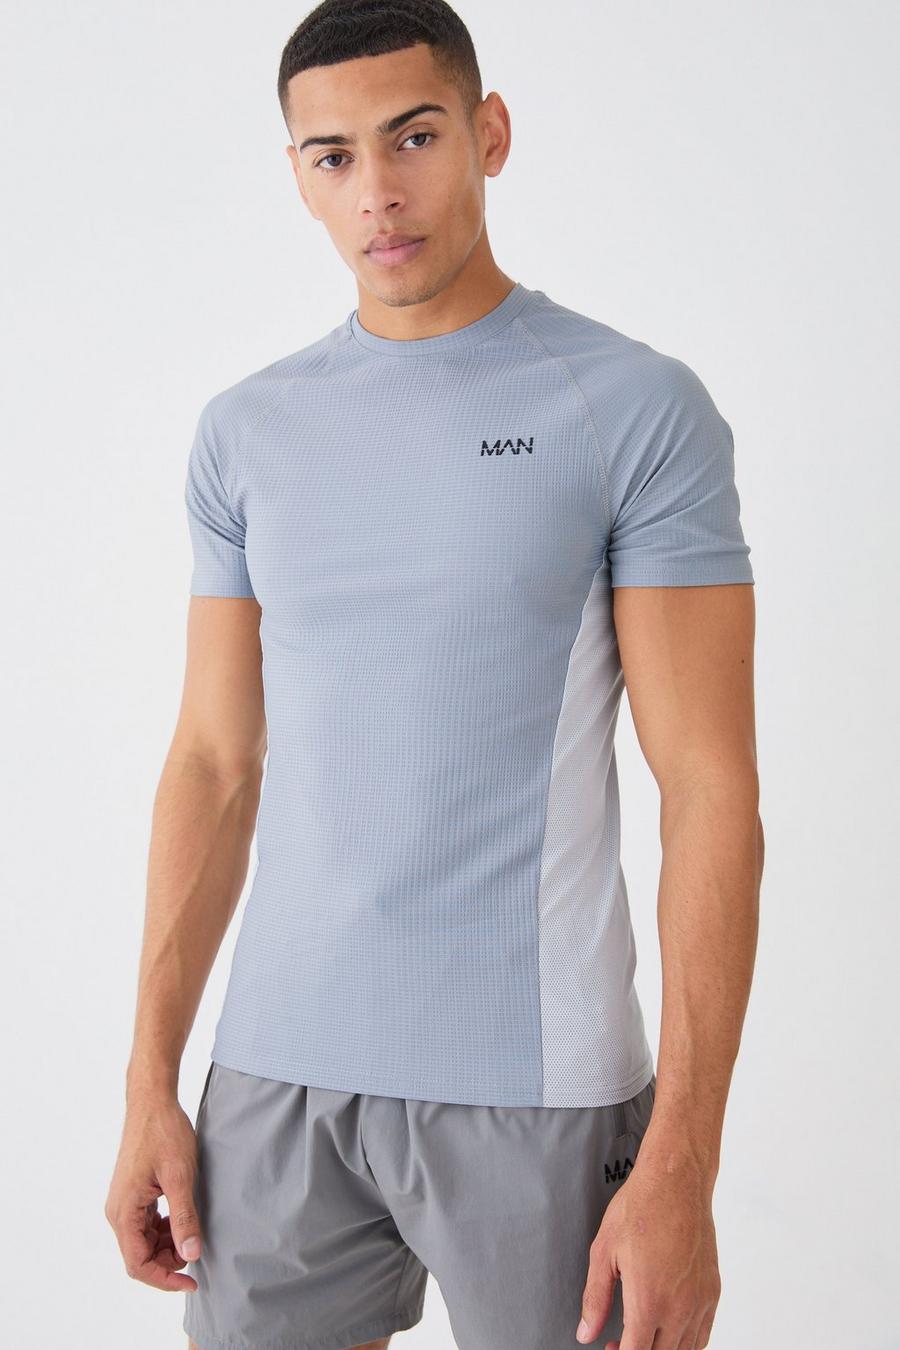 Charcoal gris Man Active Color Block Muscle Fit T-Shirt